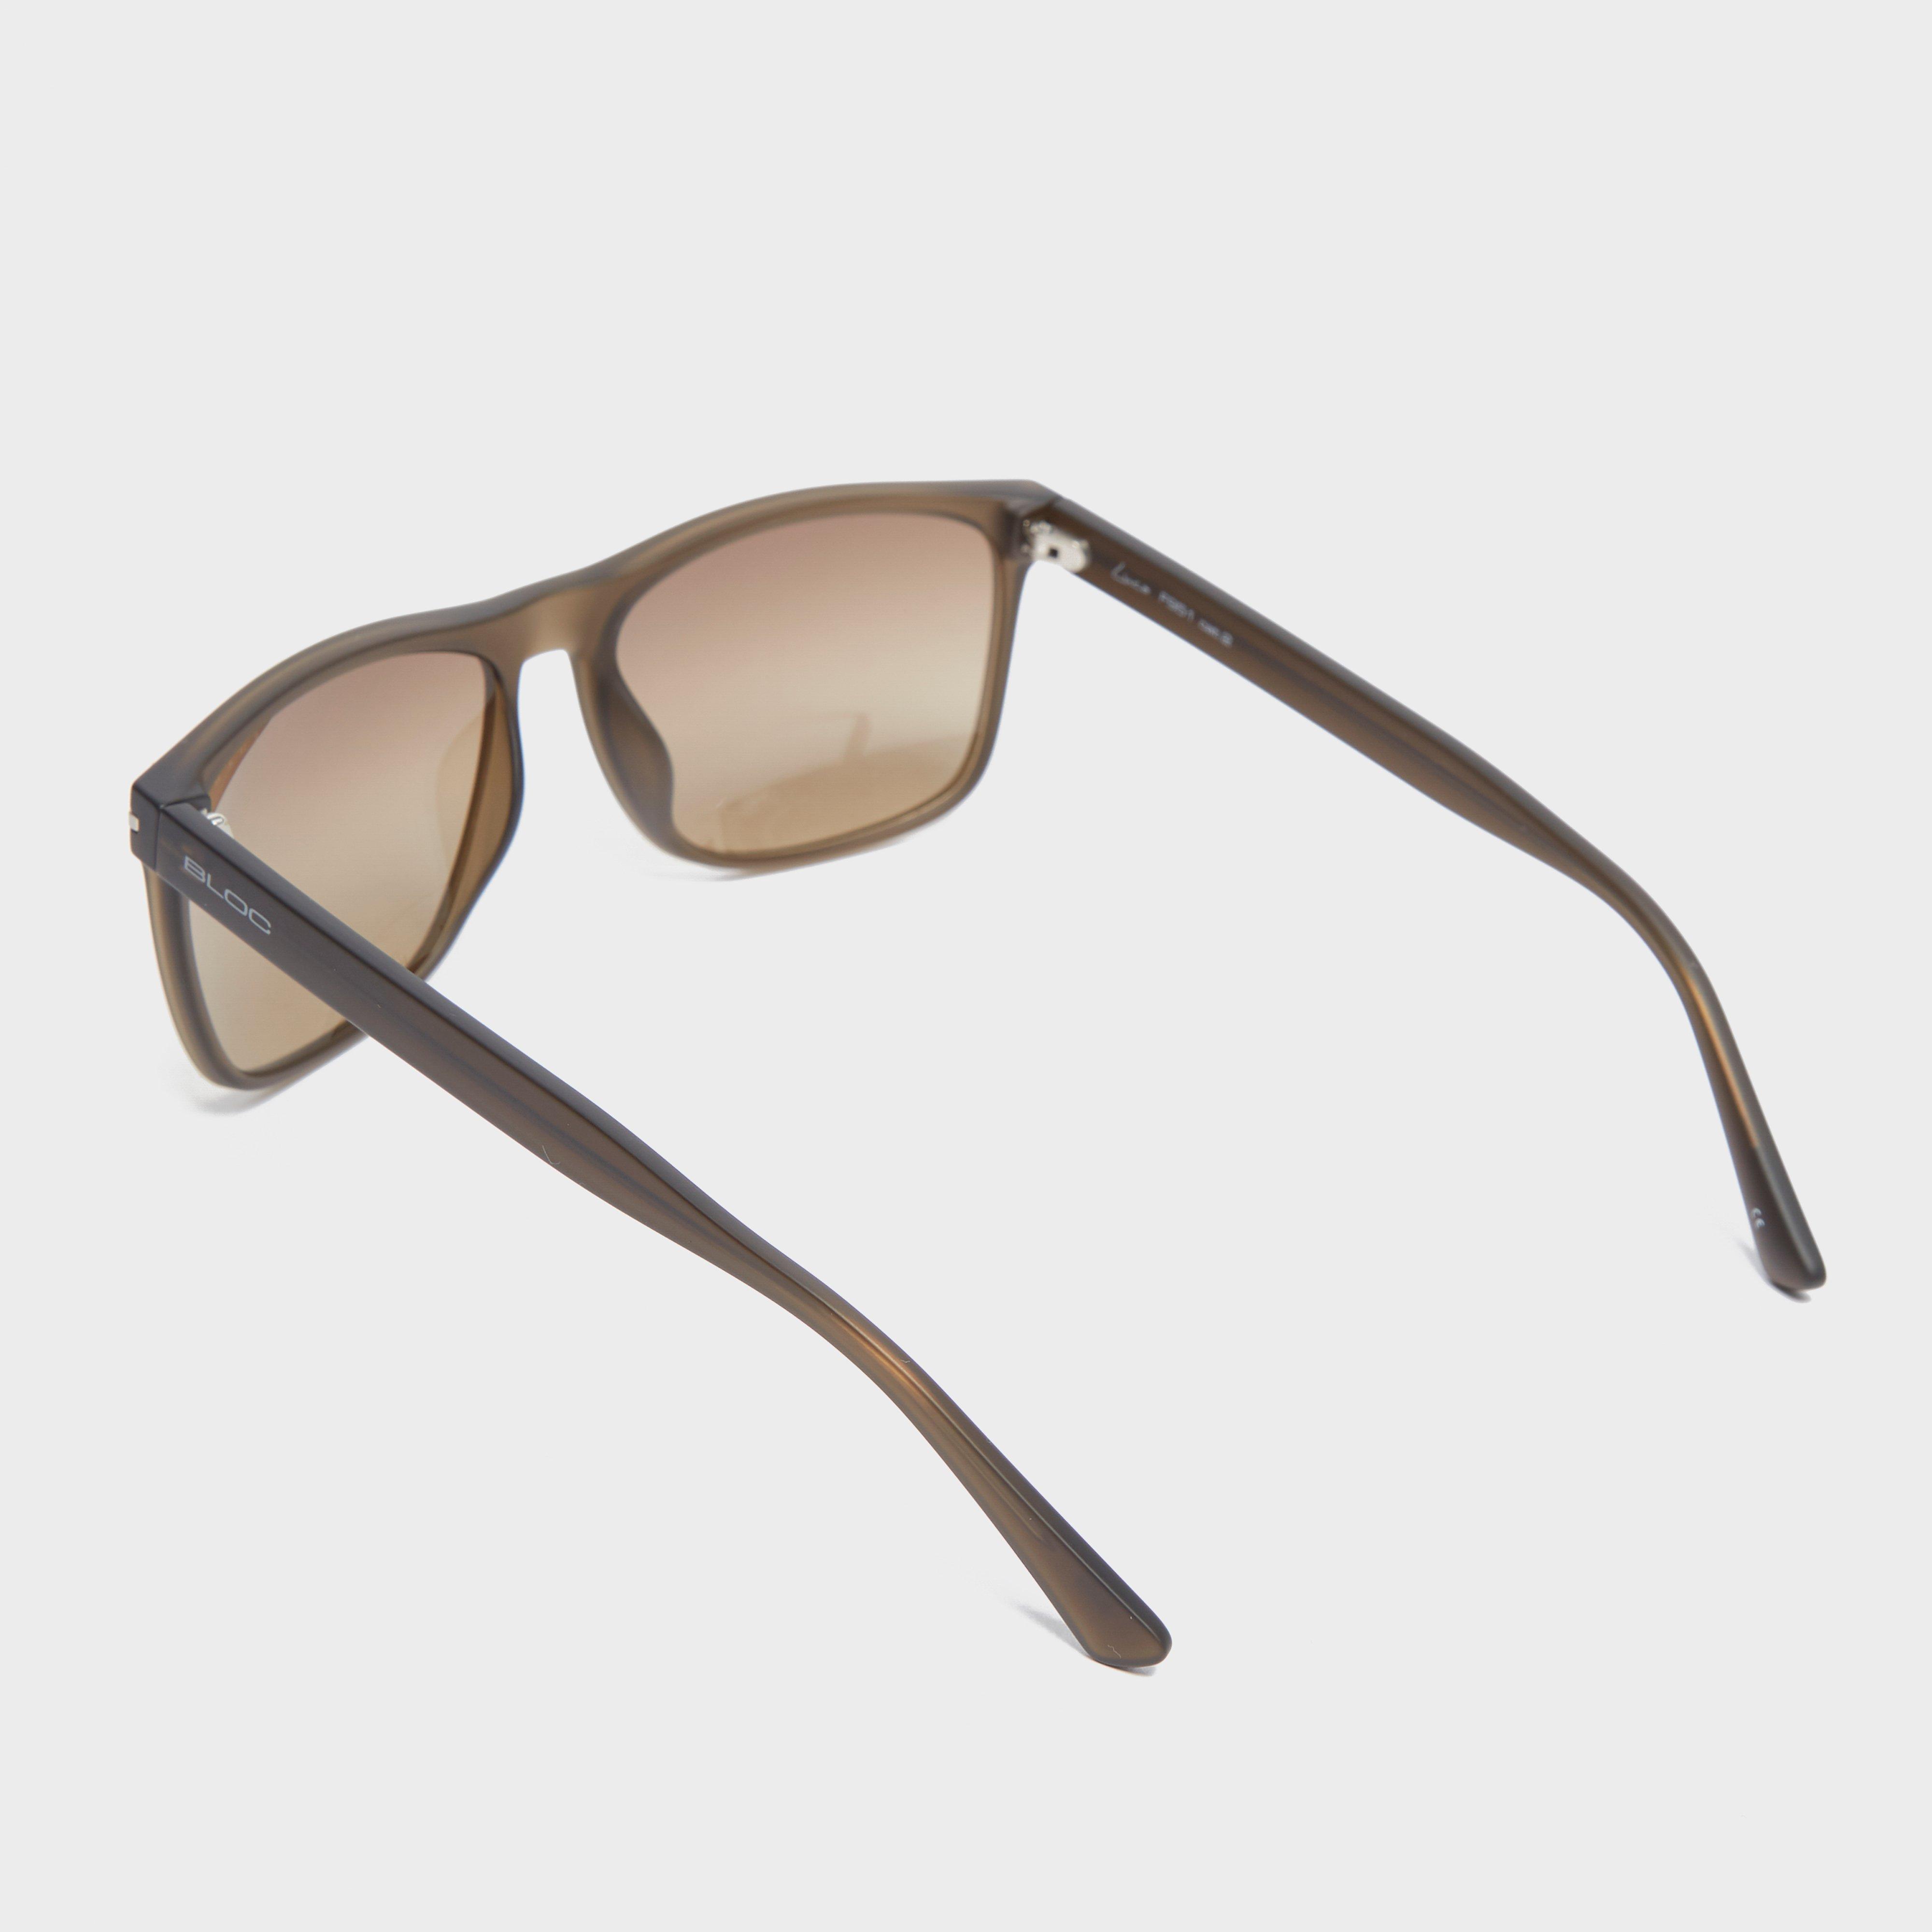 Bloc Luca F951 Sunglasses Review